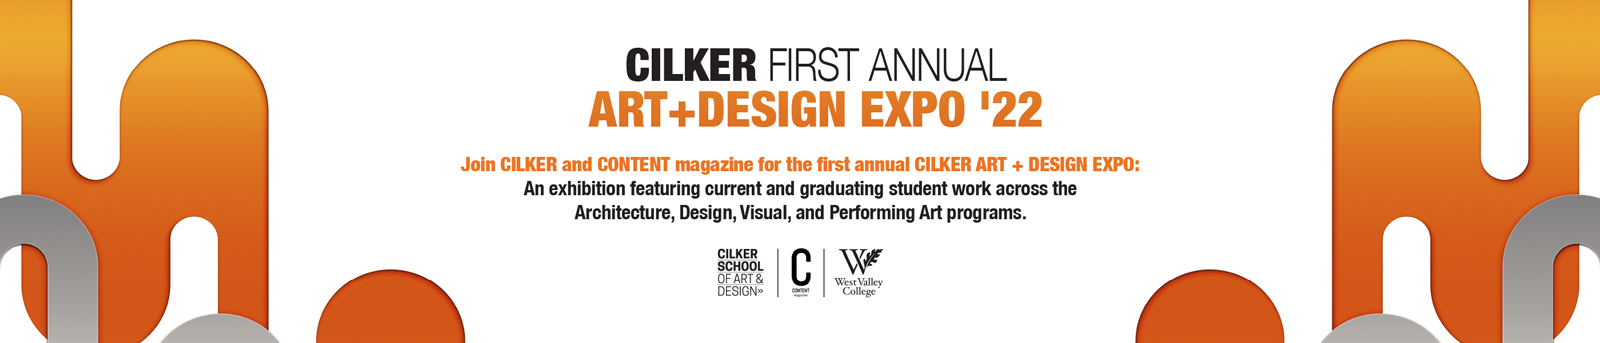 Cilker Expo event graphic in orange